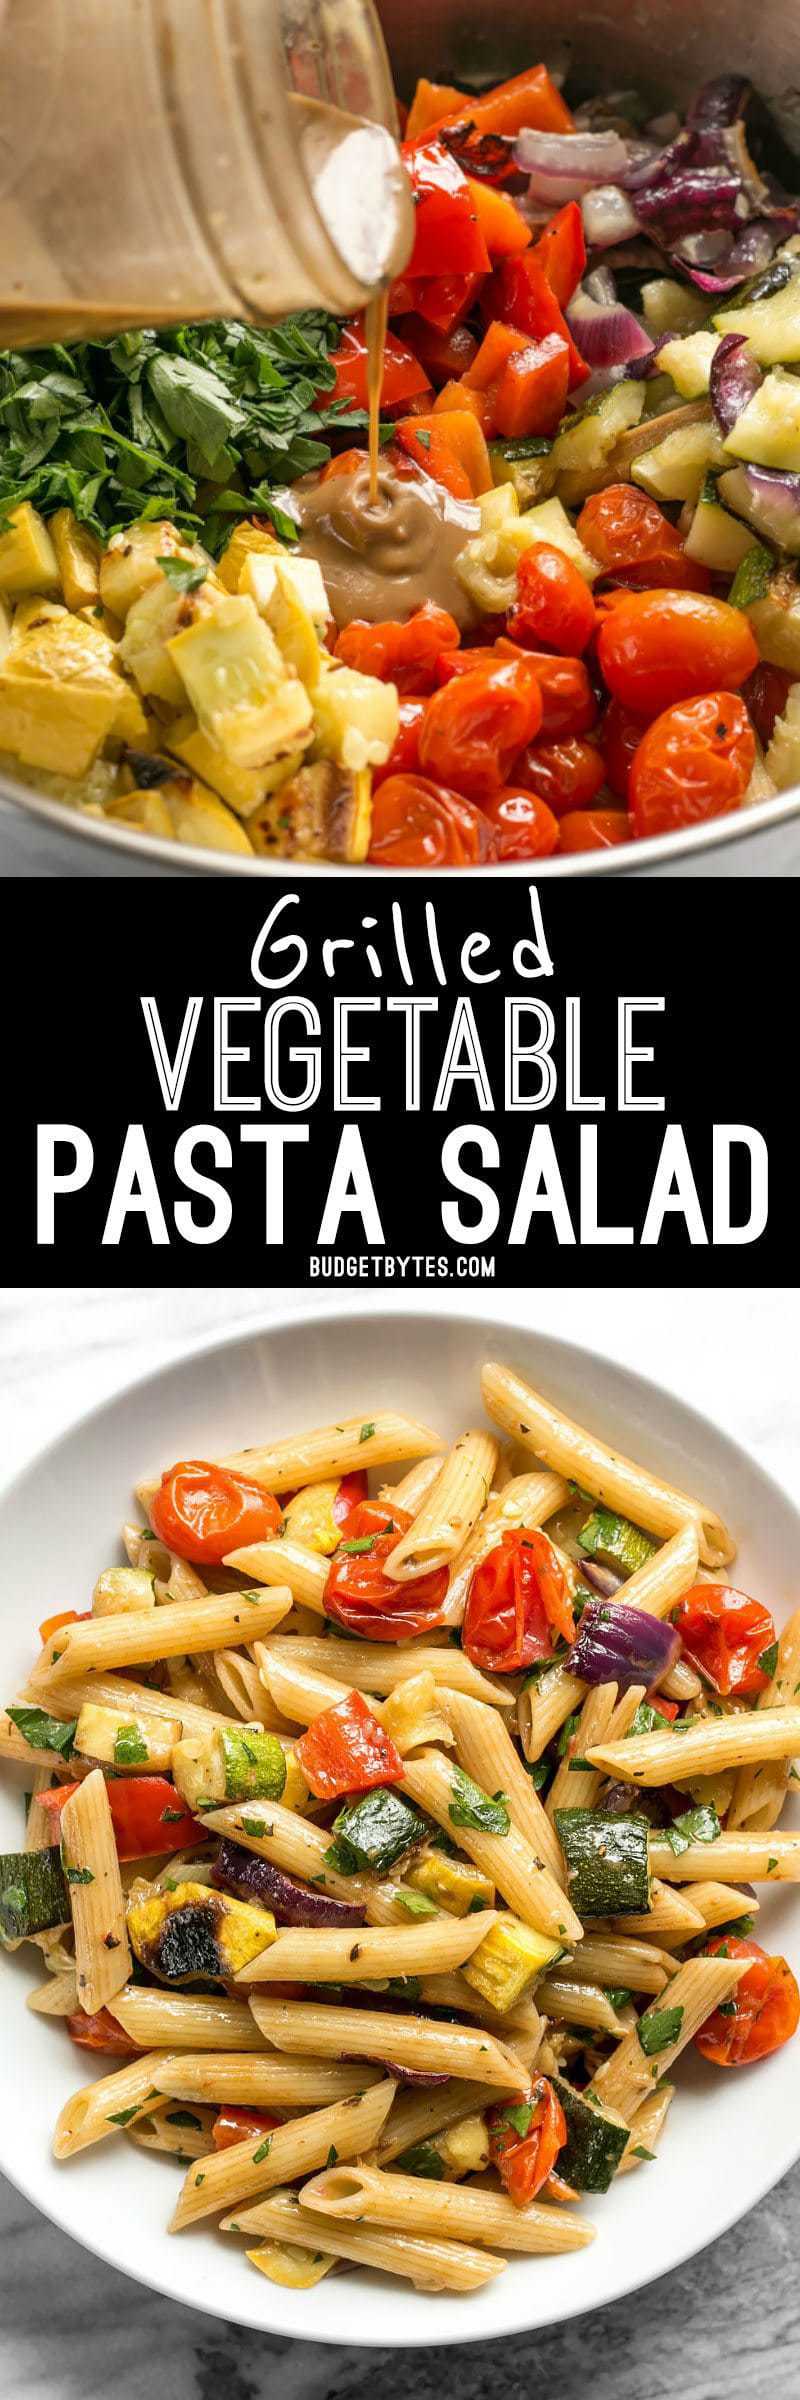 https://www.budgetbytes.com/wp-content/uploads/2017/06/Grilled-Vegetable-Pasta-Salad-Collage.jpg